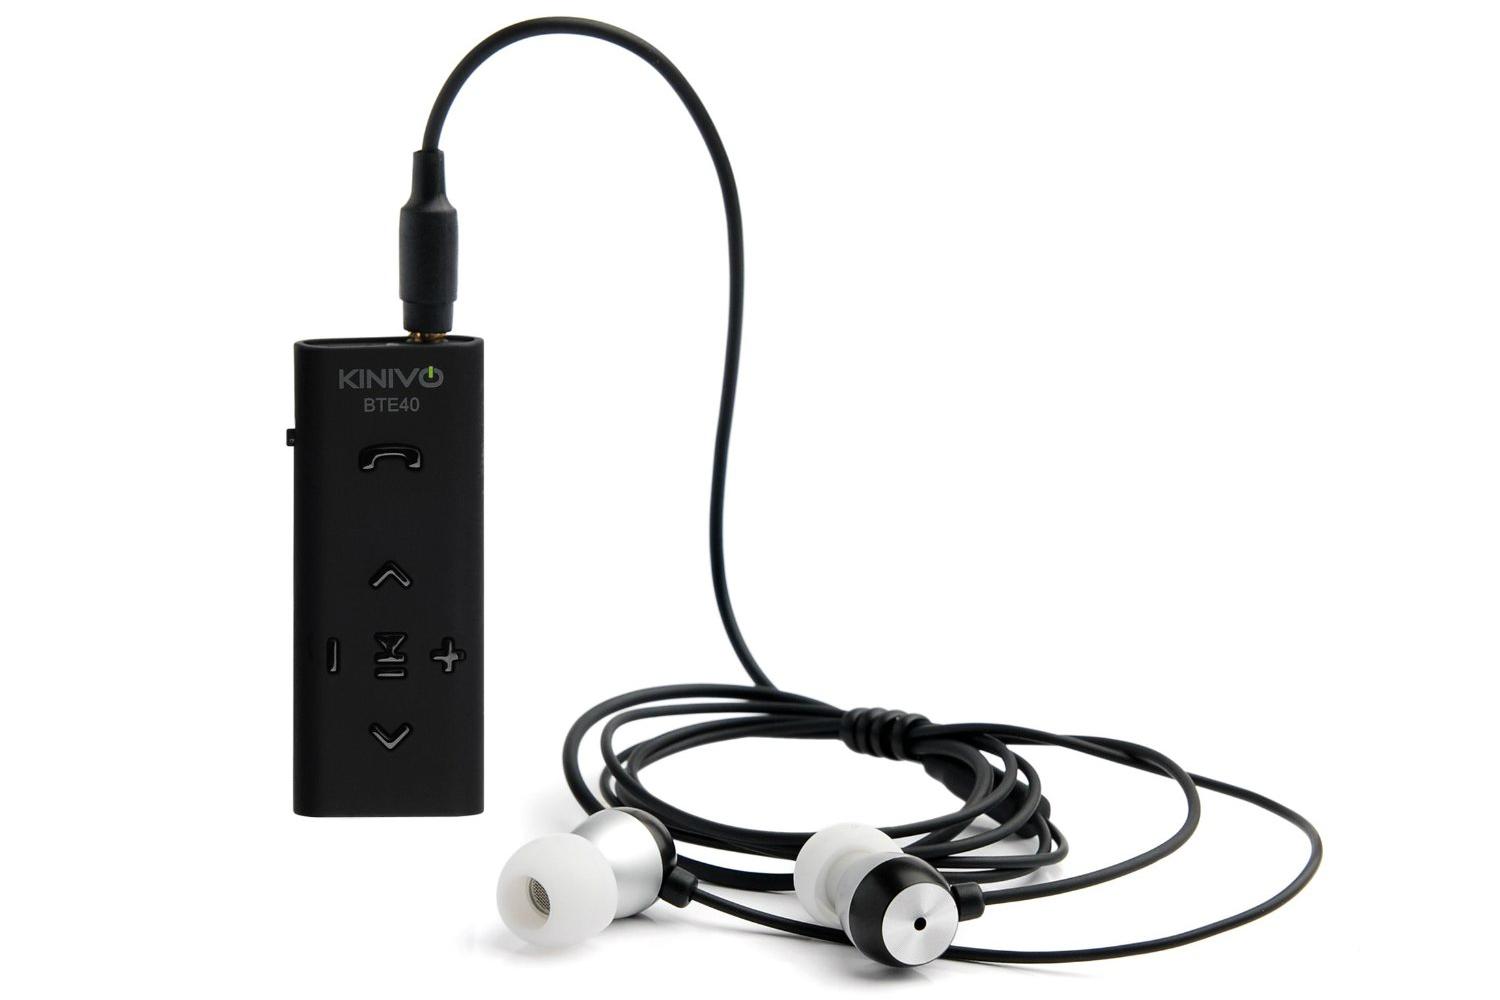 kinivos bte40 makes any headphones or home stereo wireless 5